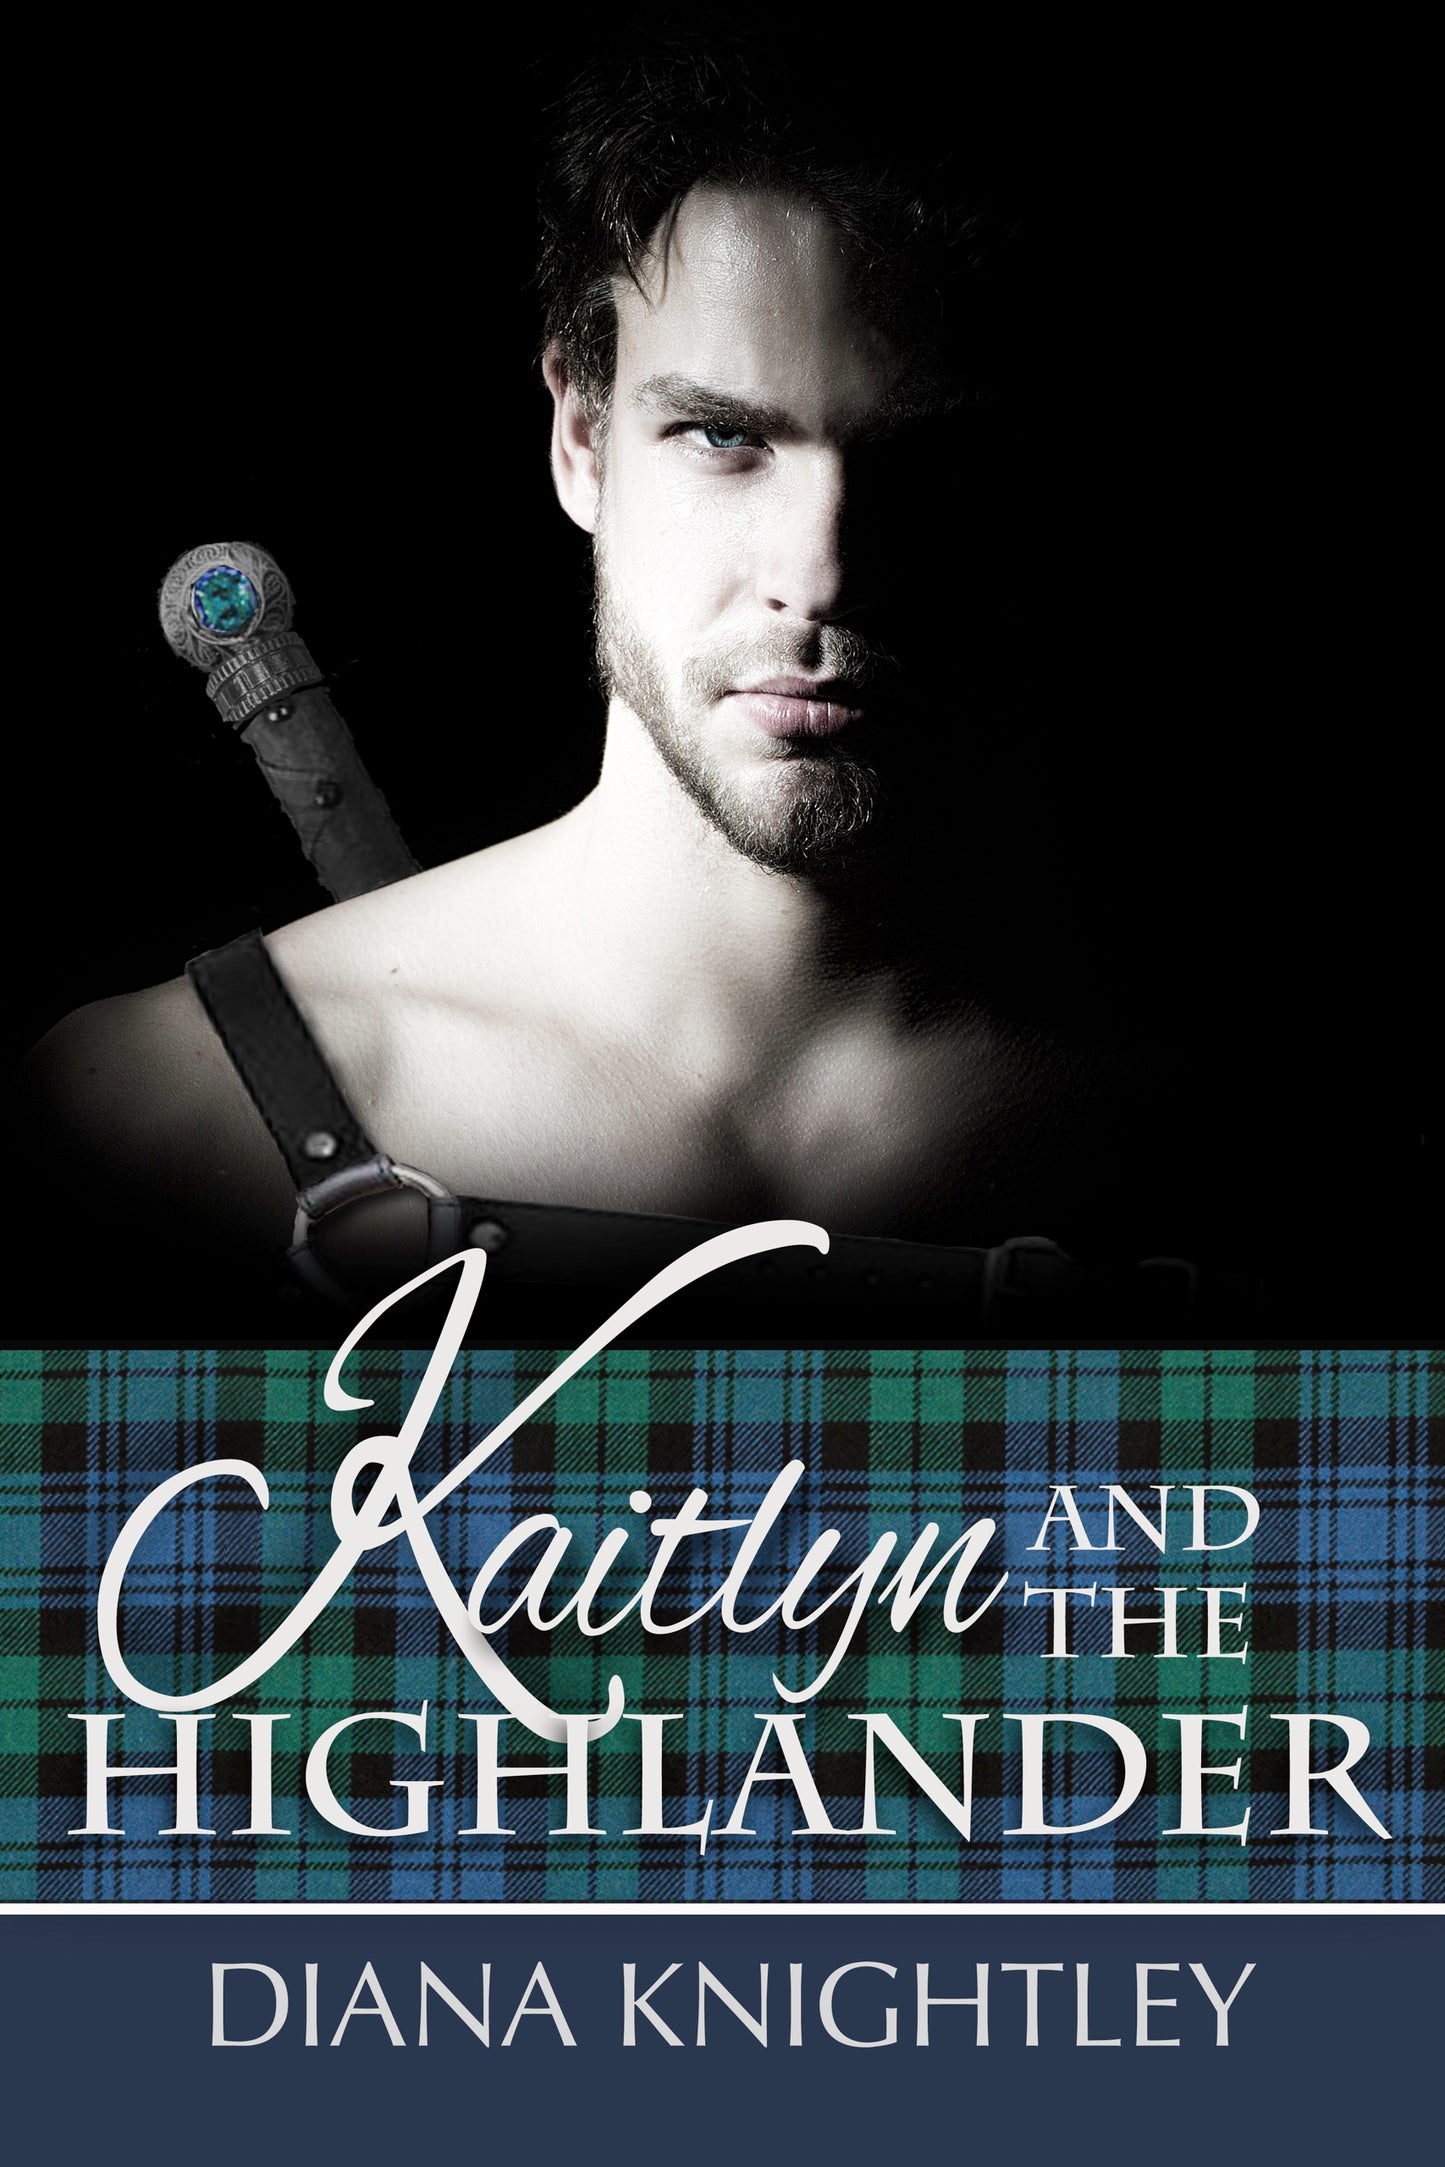 Book 1: Kaitlyn And The Highlander (KATH)